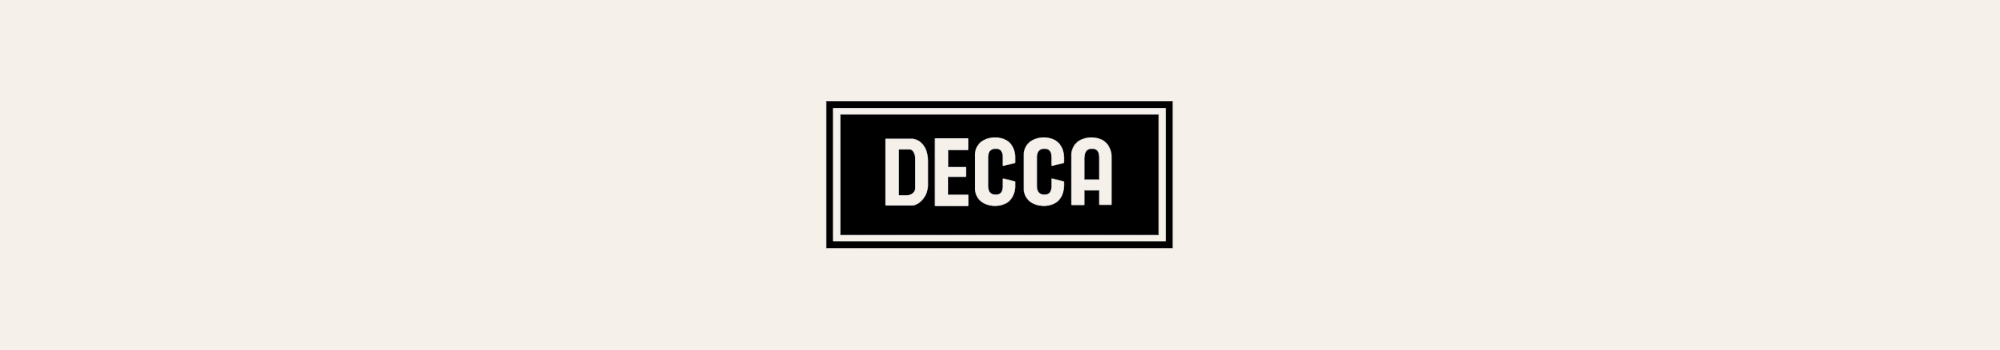 Decca Records logotyp